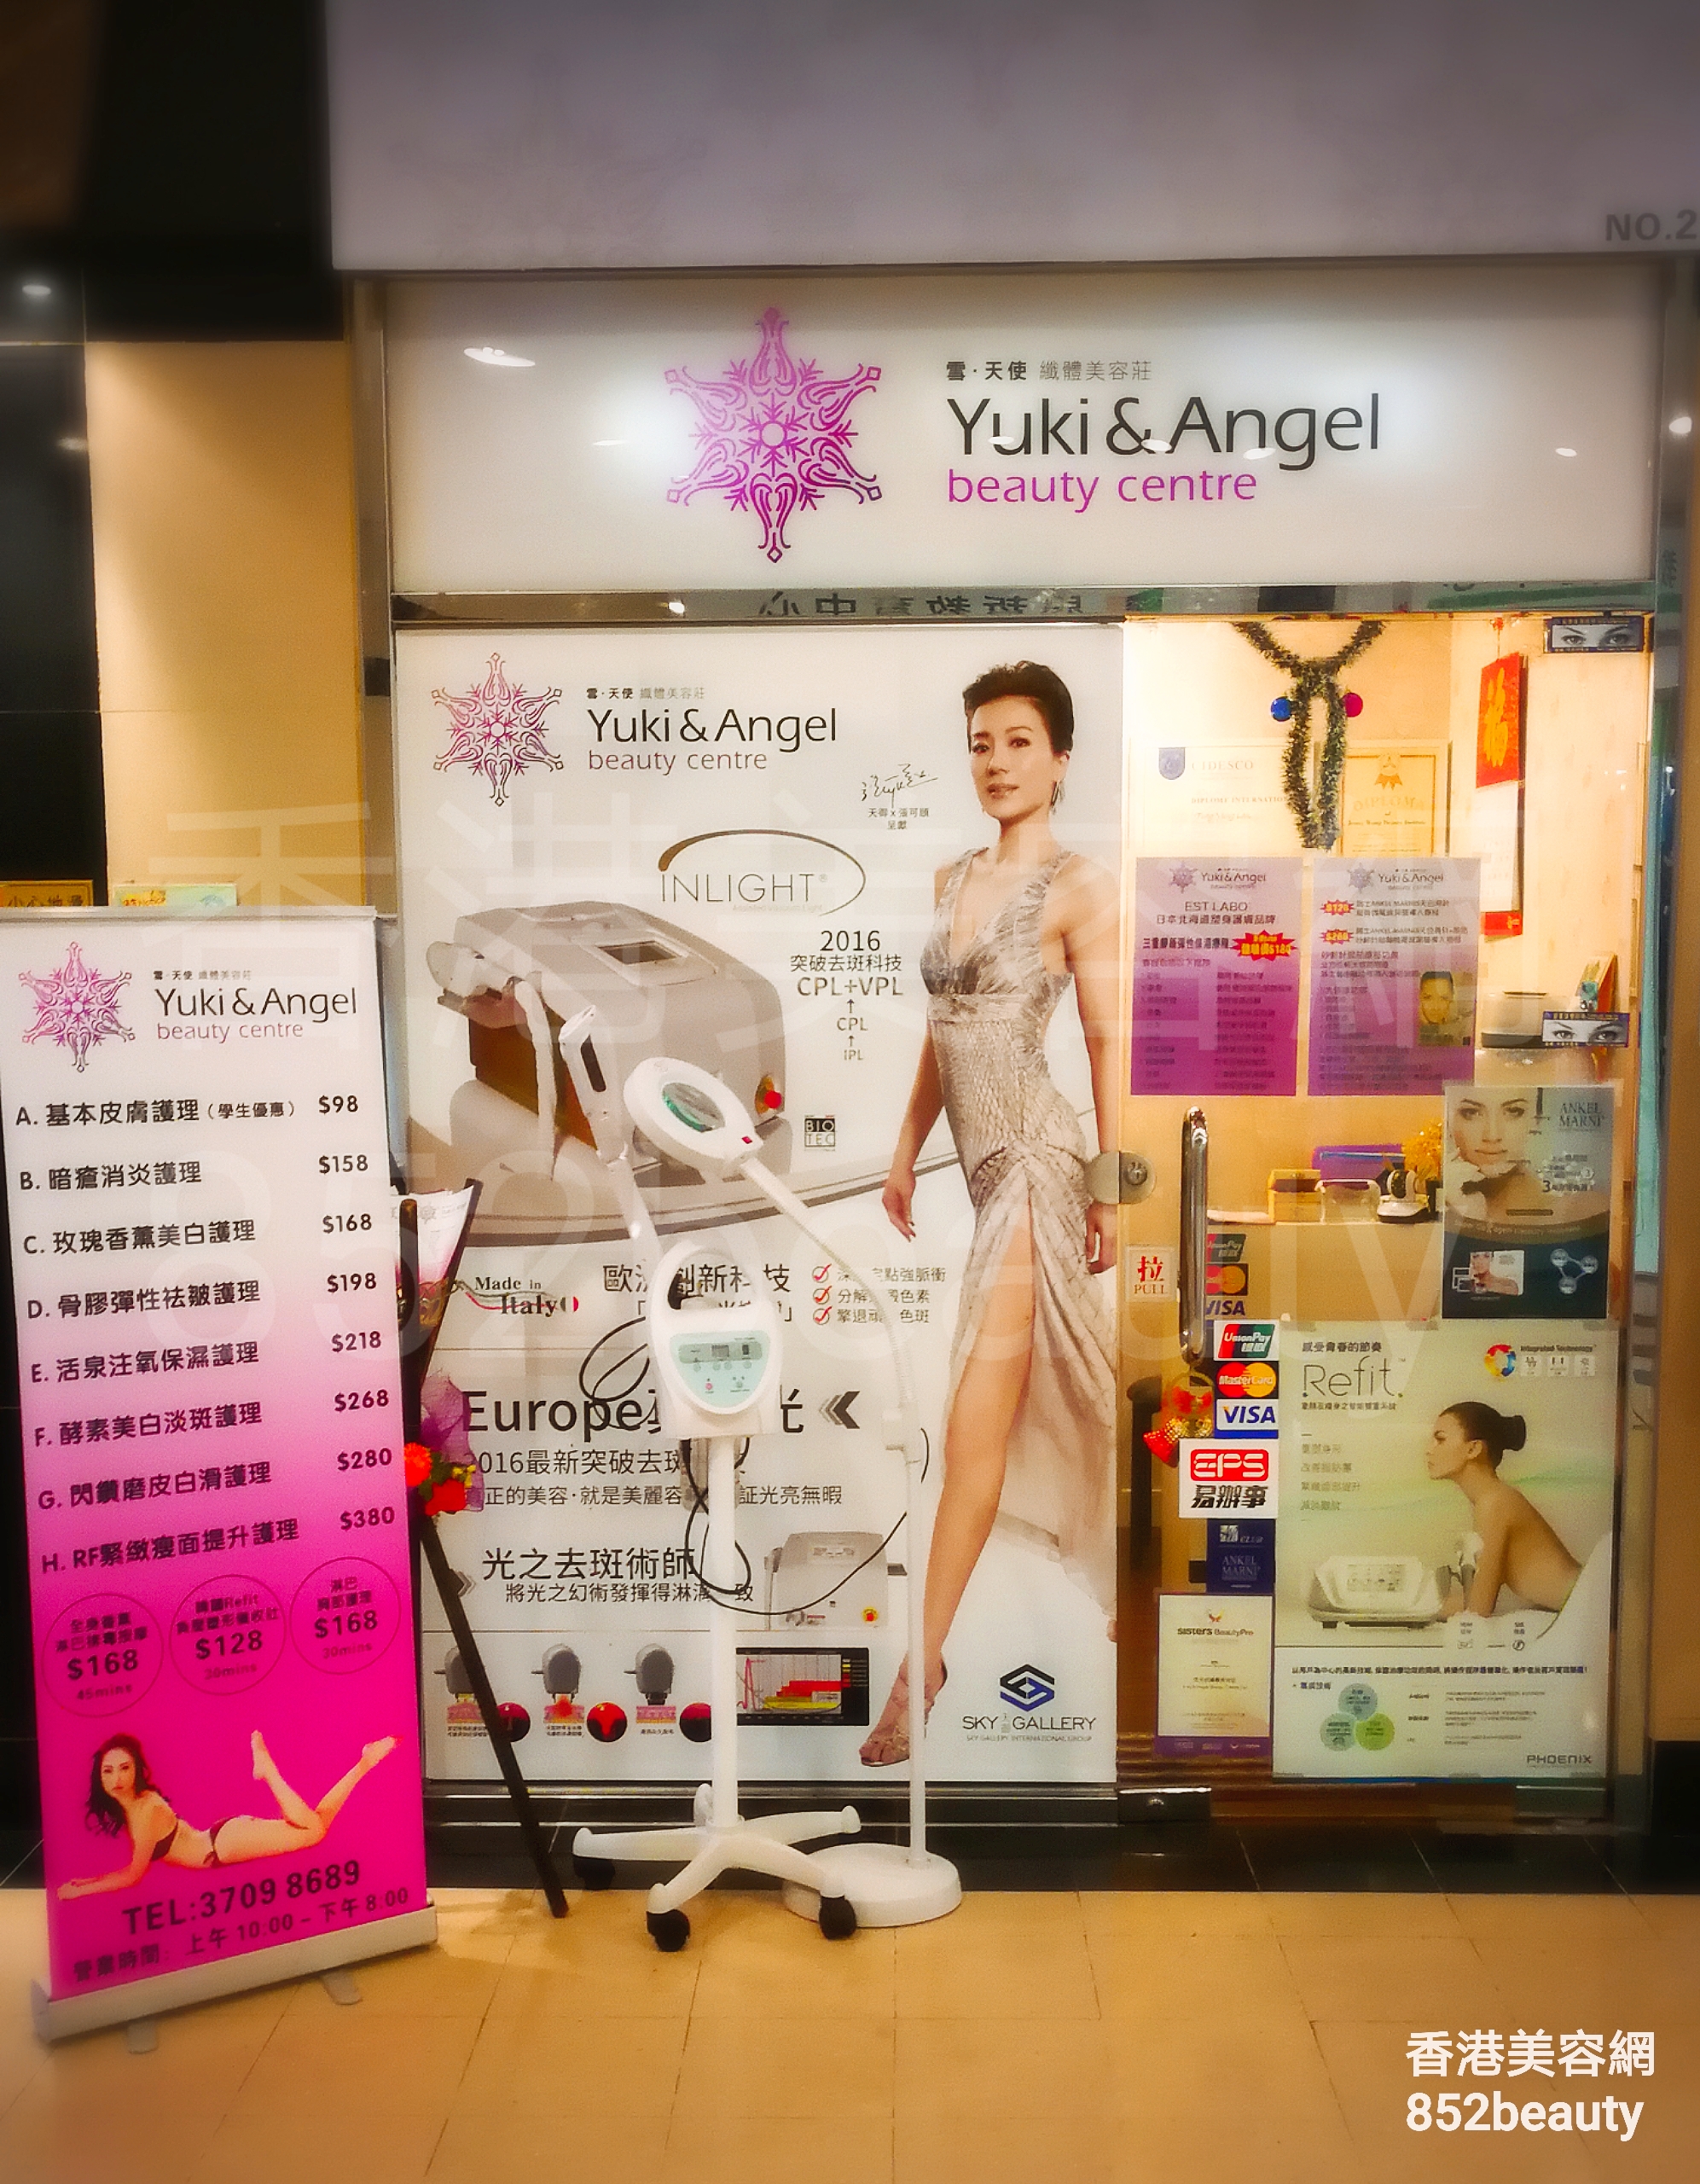 修眉/眼睫毛: Yuki & Angel beauty centre